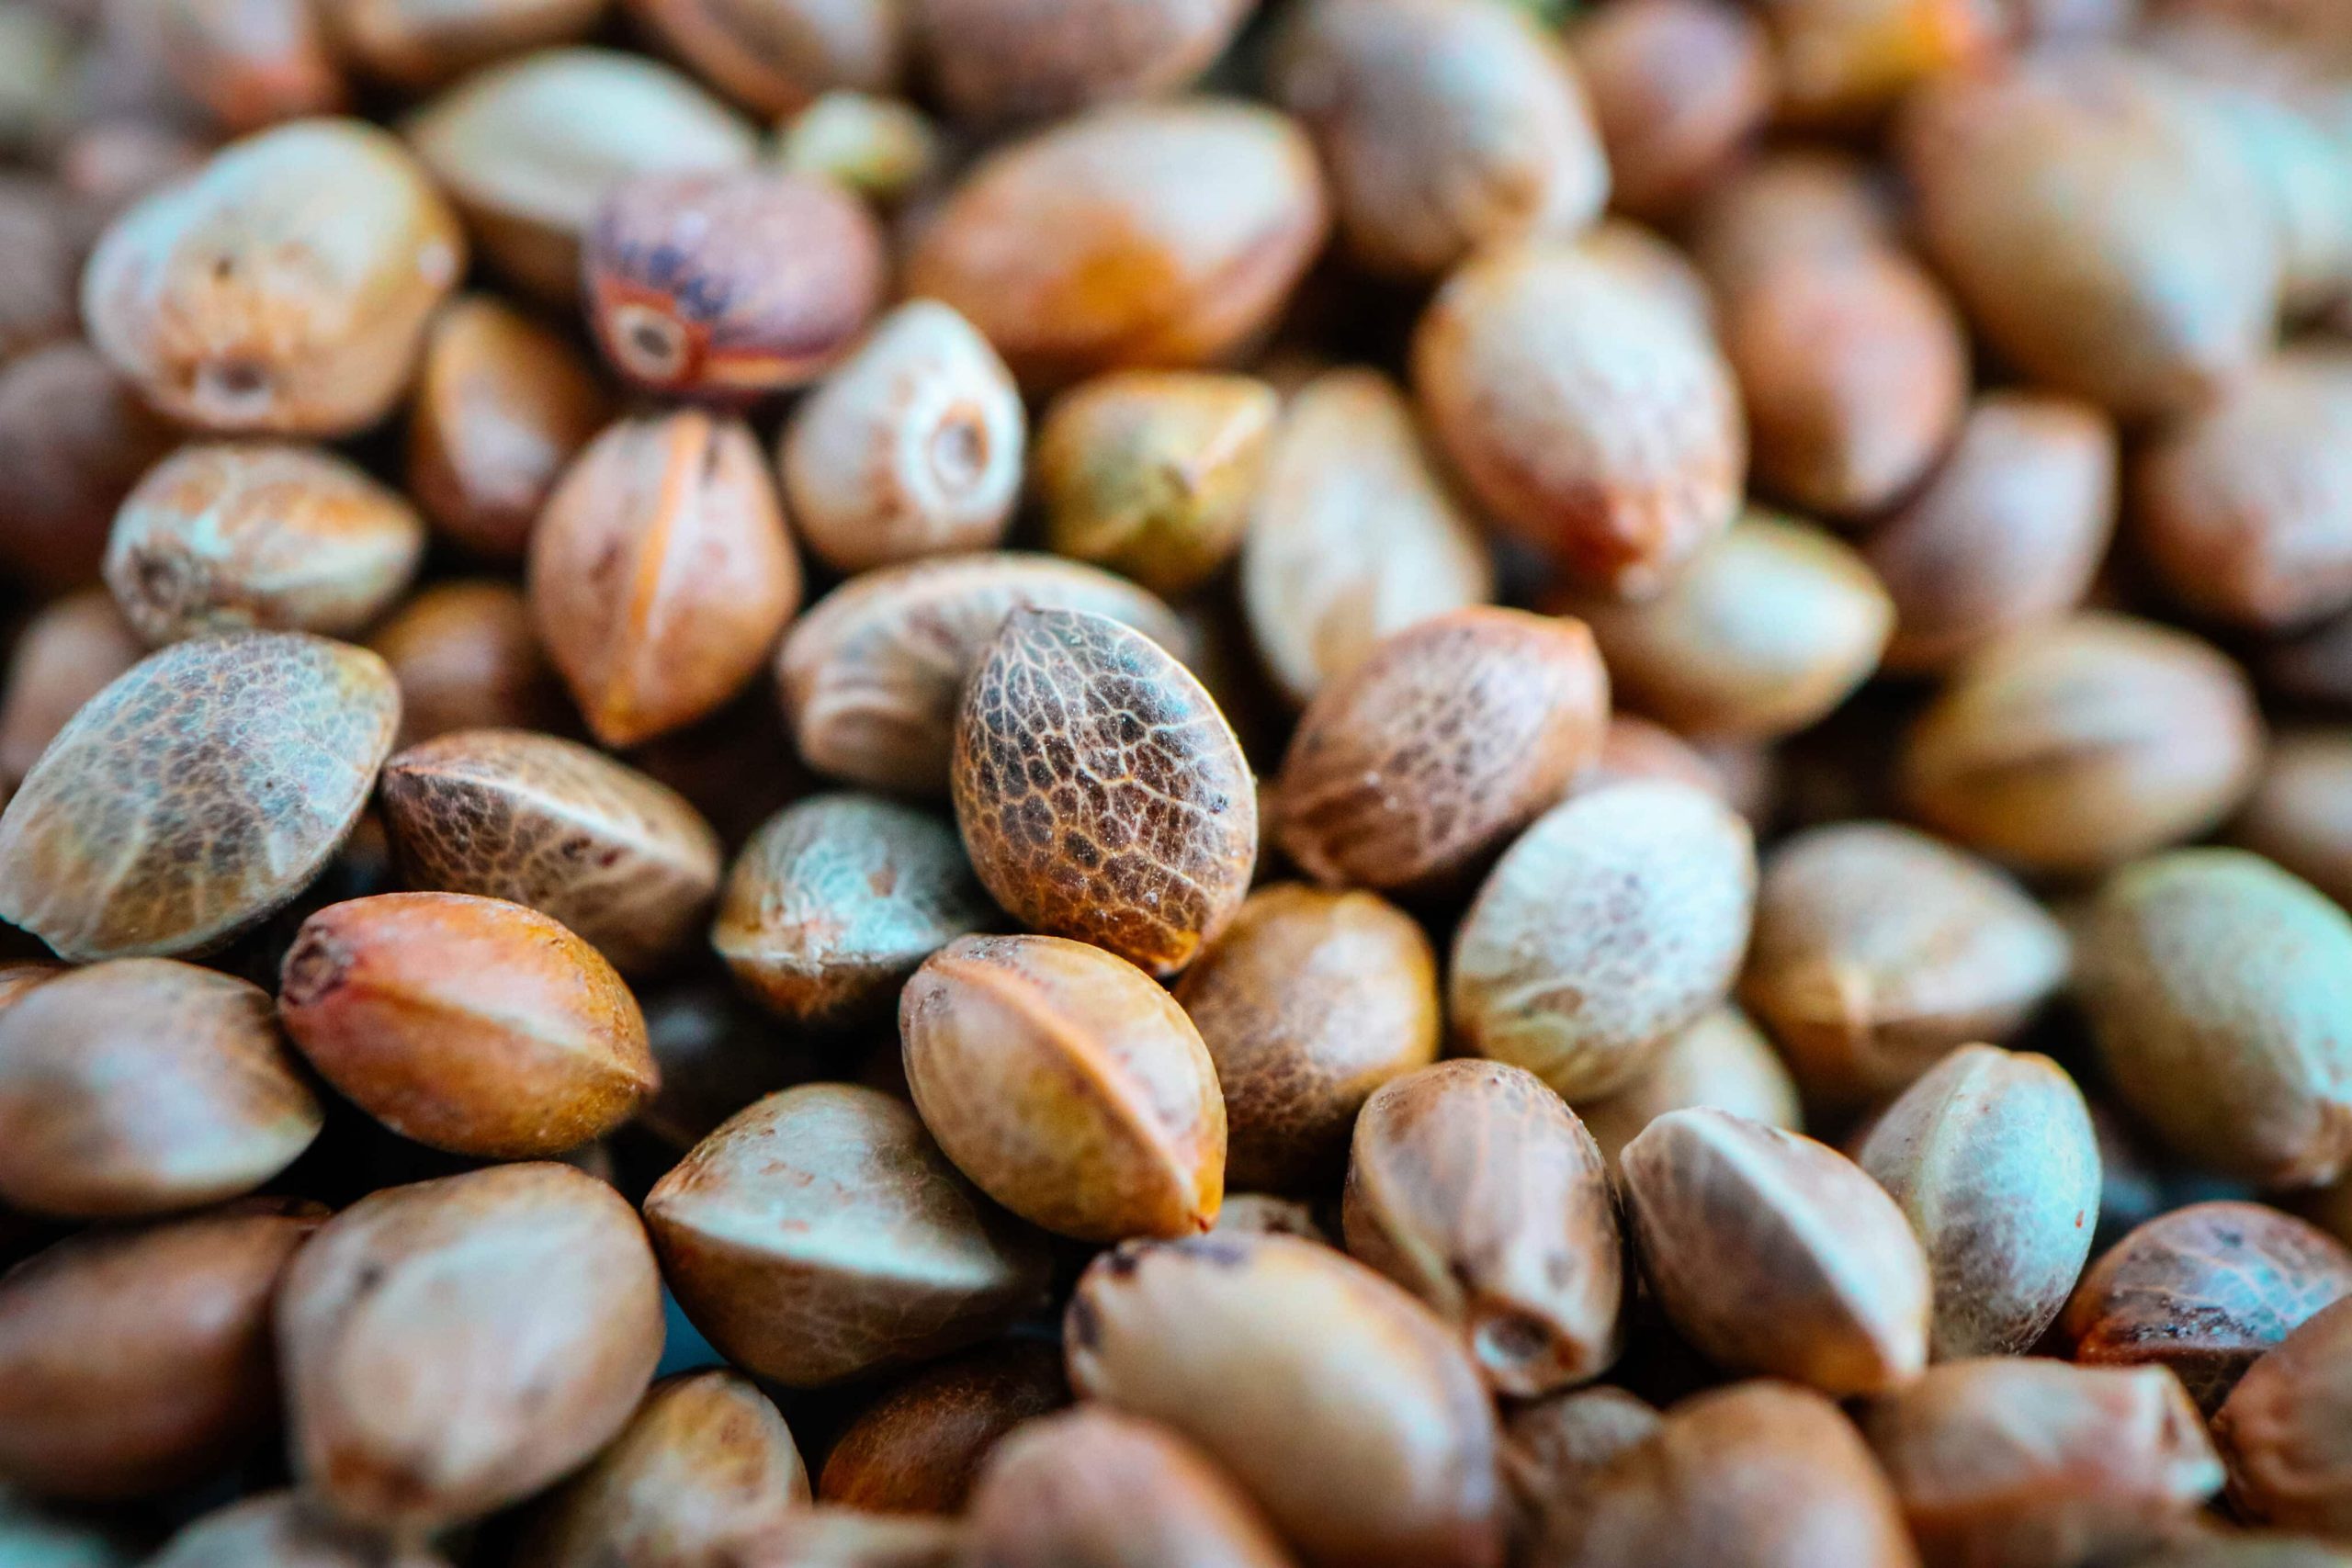 North America Dominates Seed Market, Report Indicates